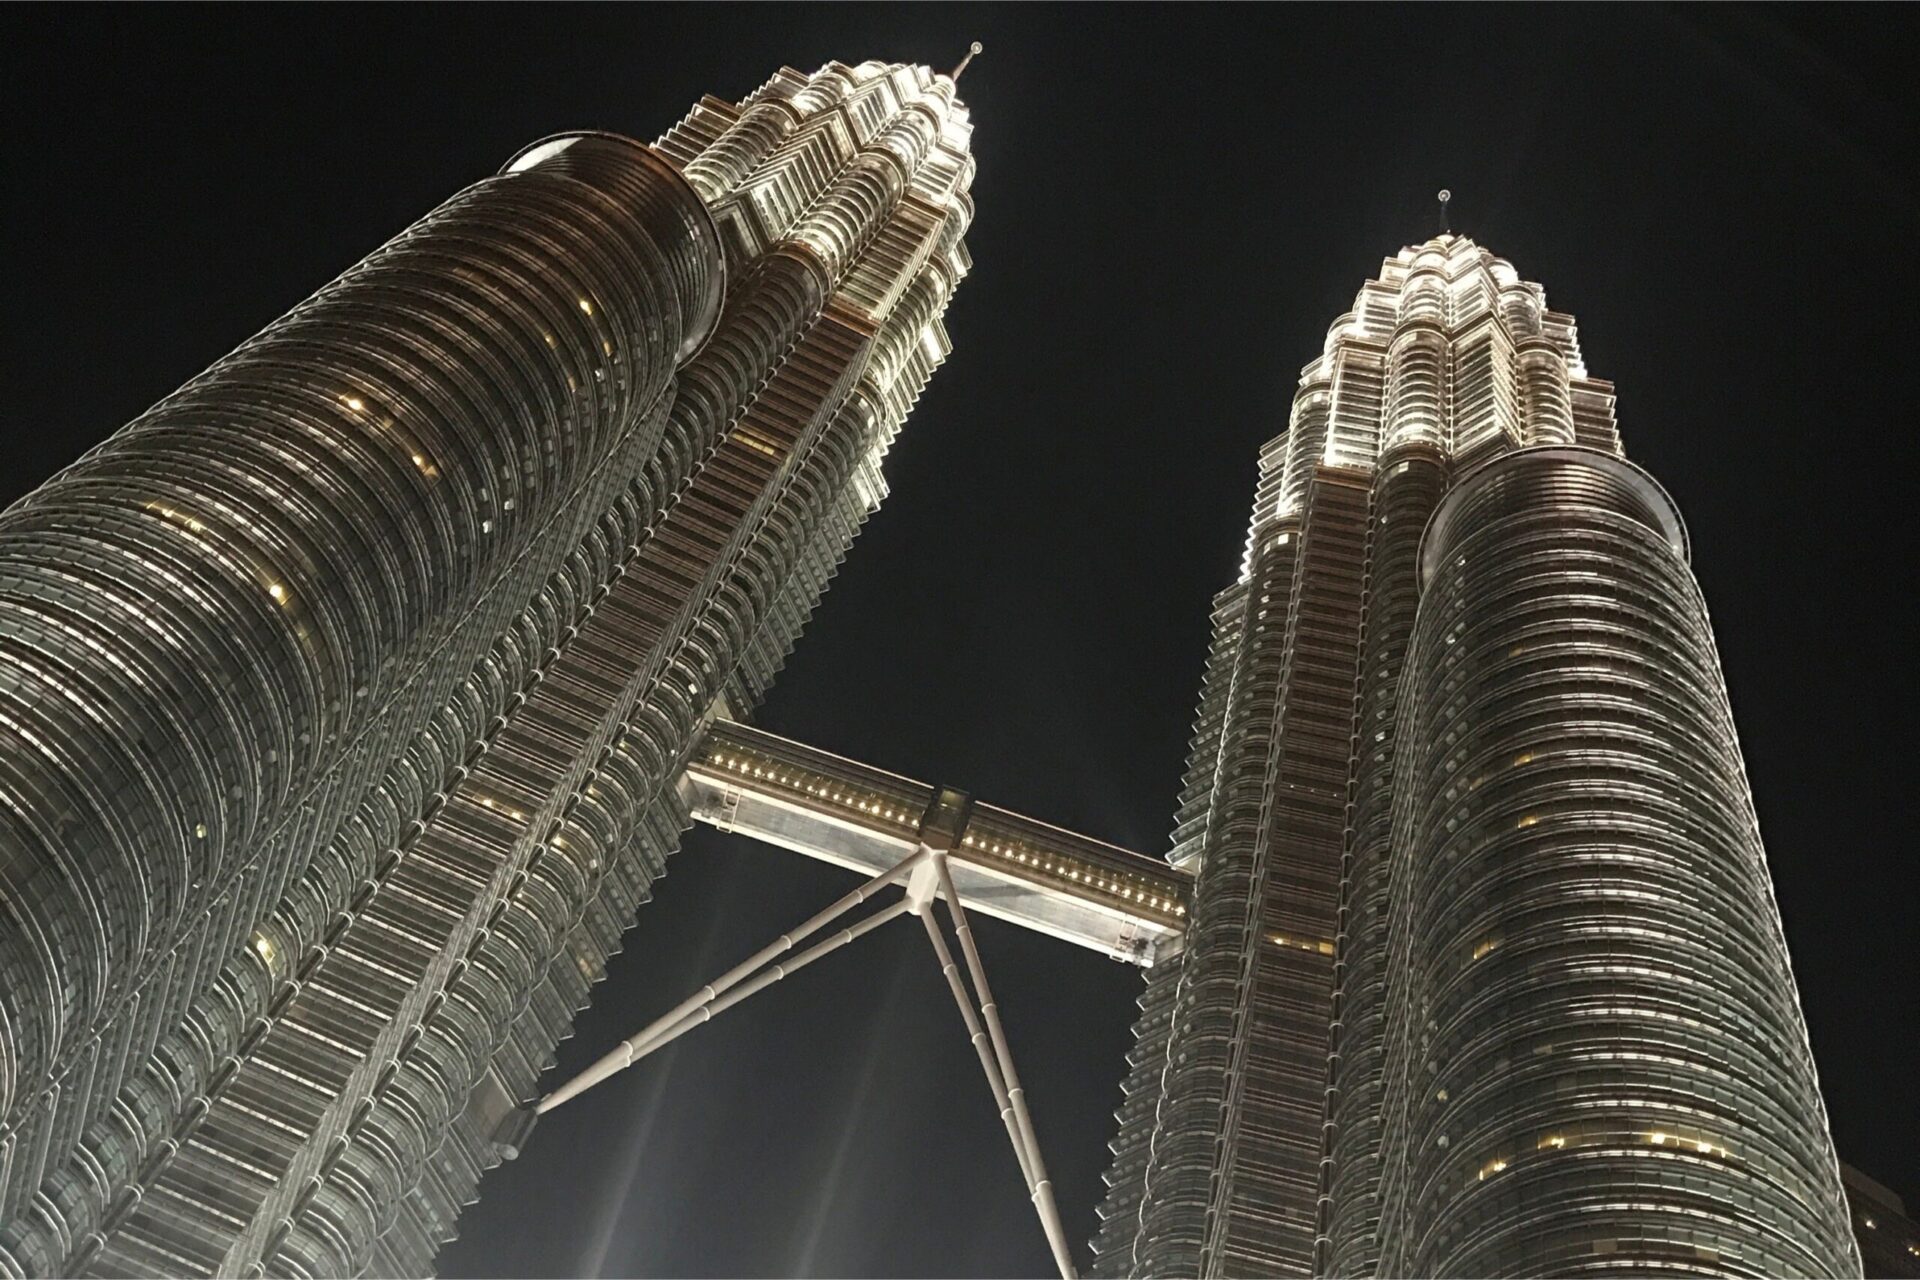 petronas twin towers